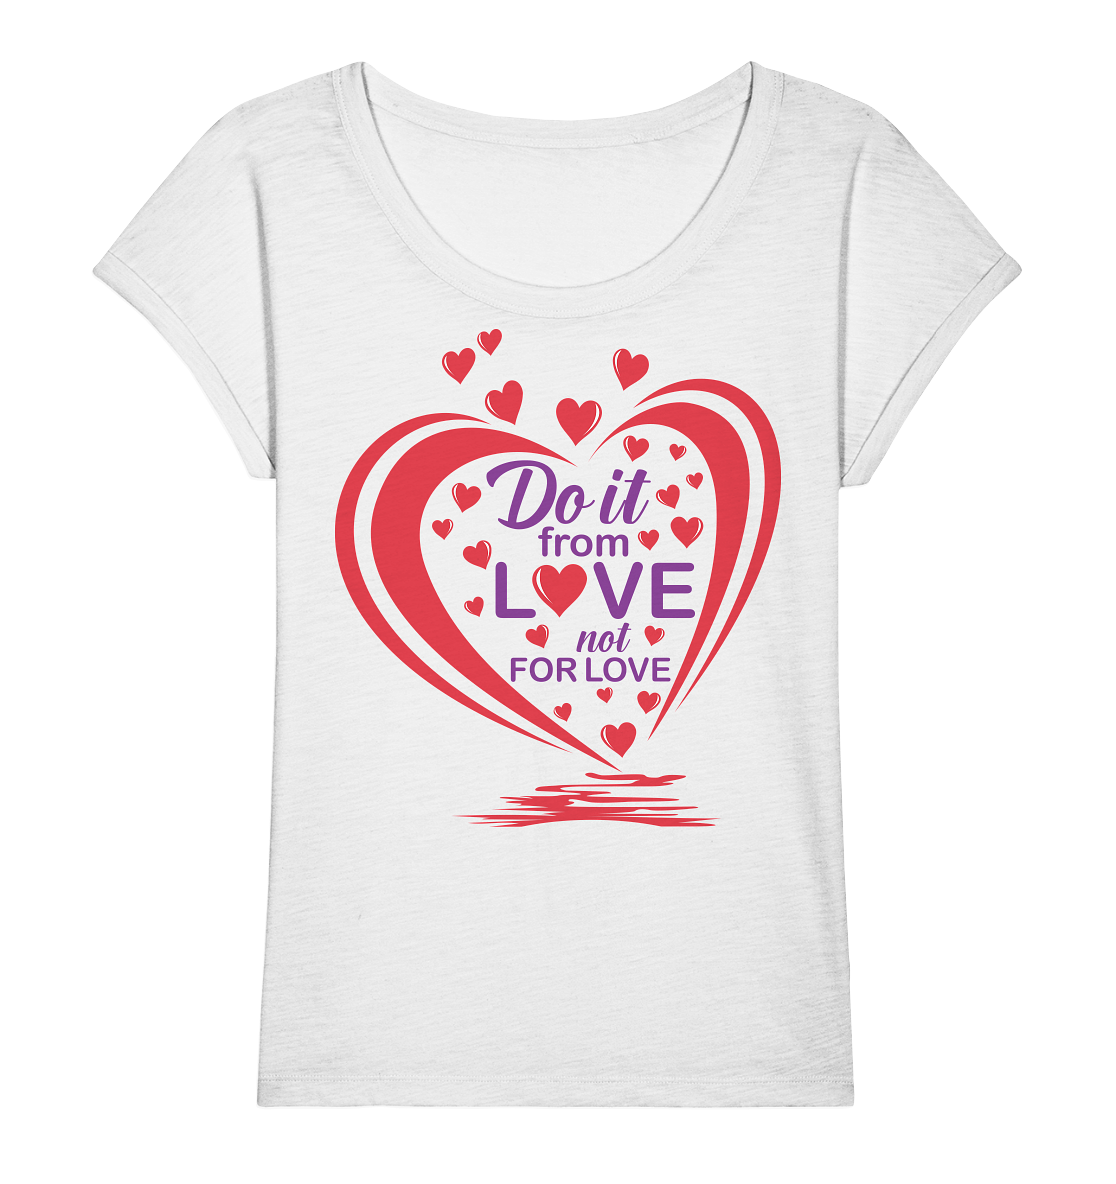 Do it from love not for love - Ladies Organic Slub Shirt